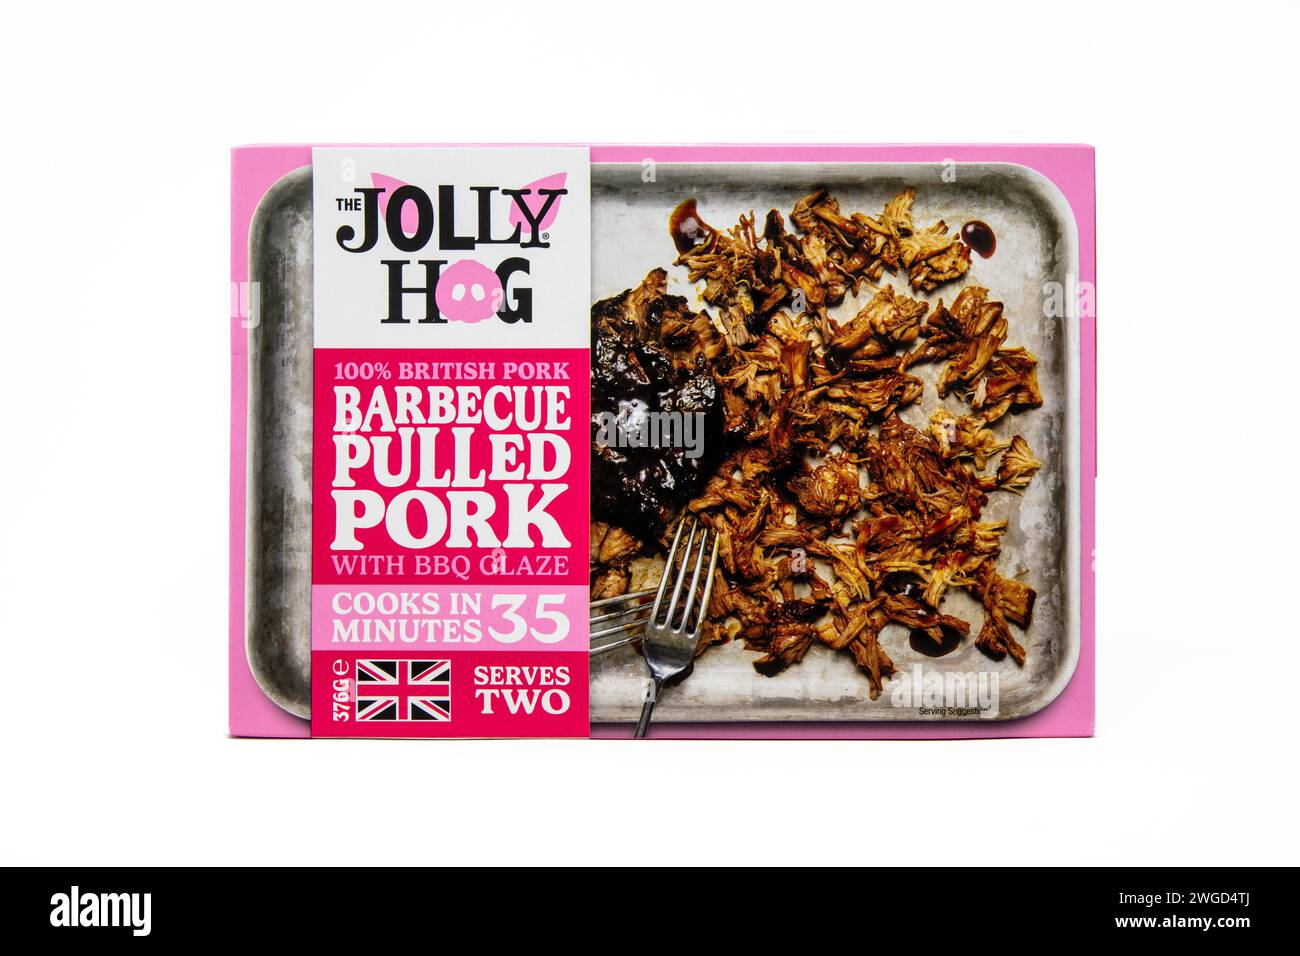 The Jolly Hog BBQ Pulled Pork 376g Stock Photo